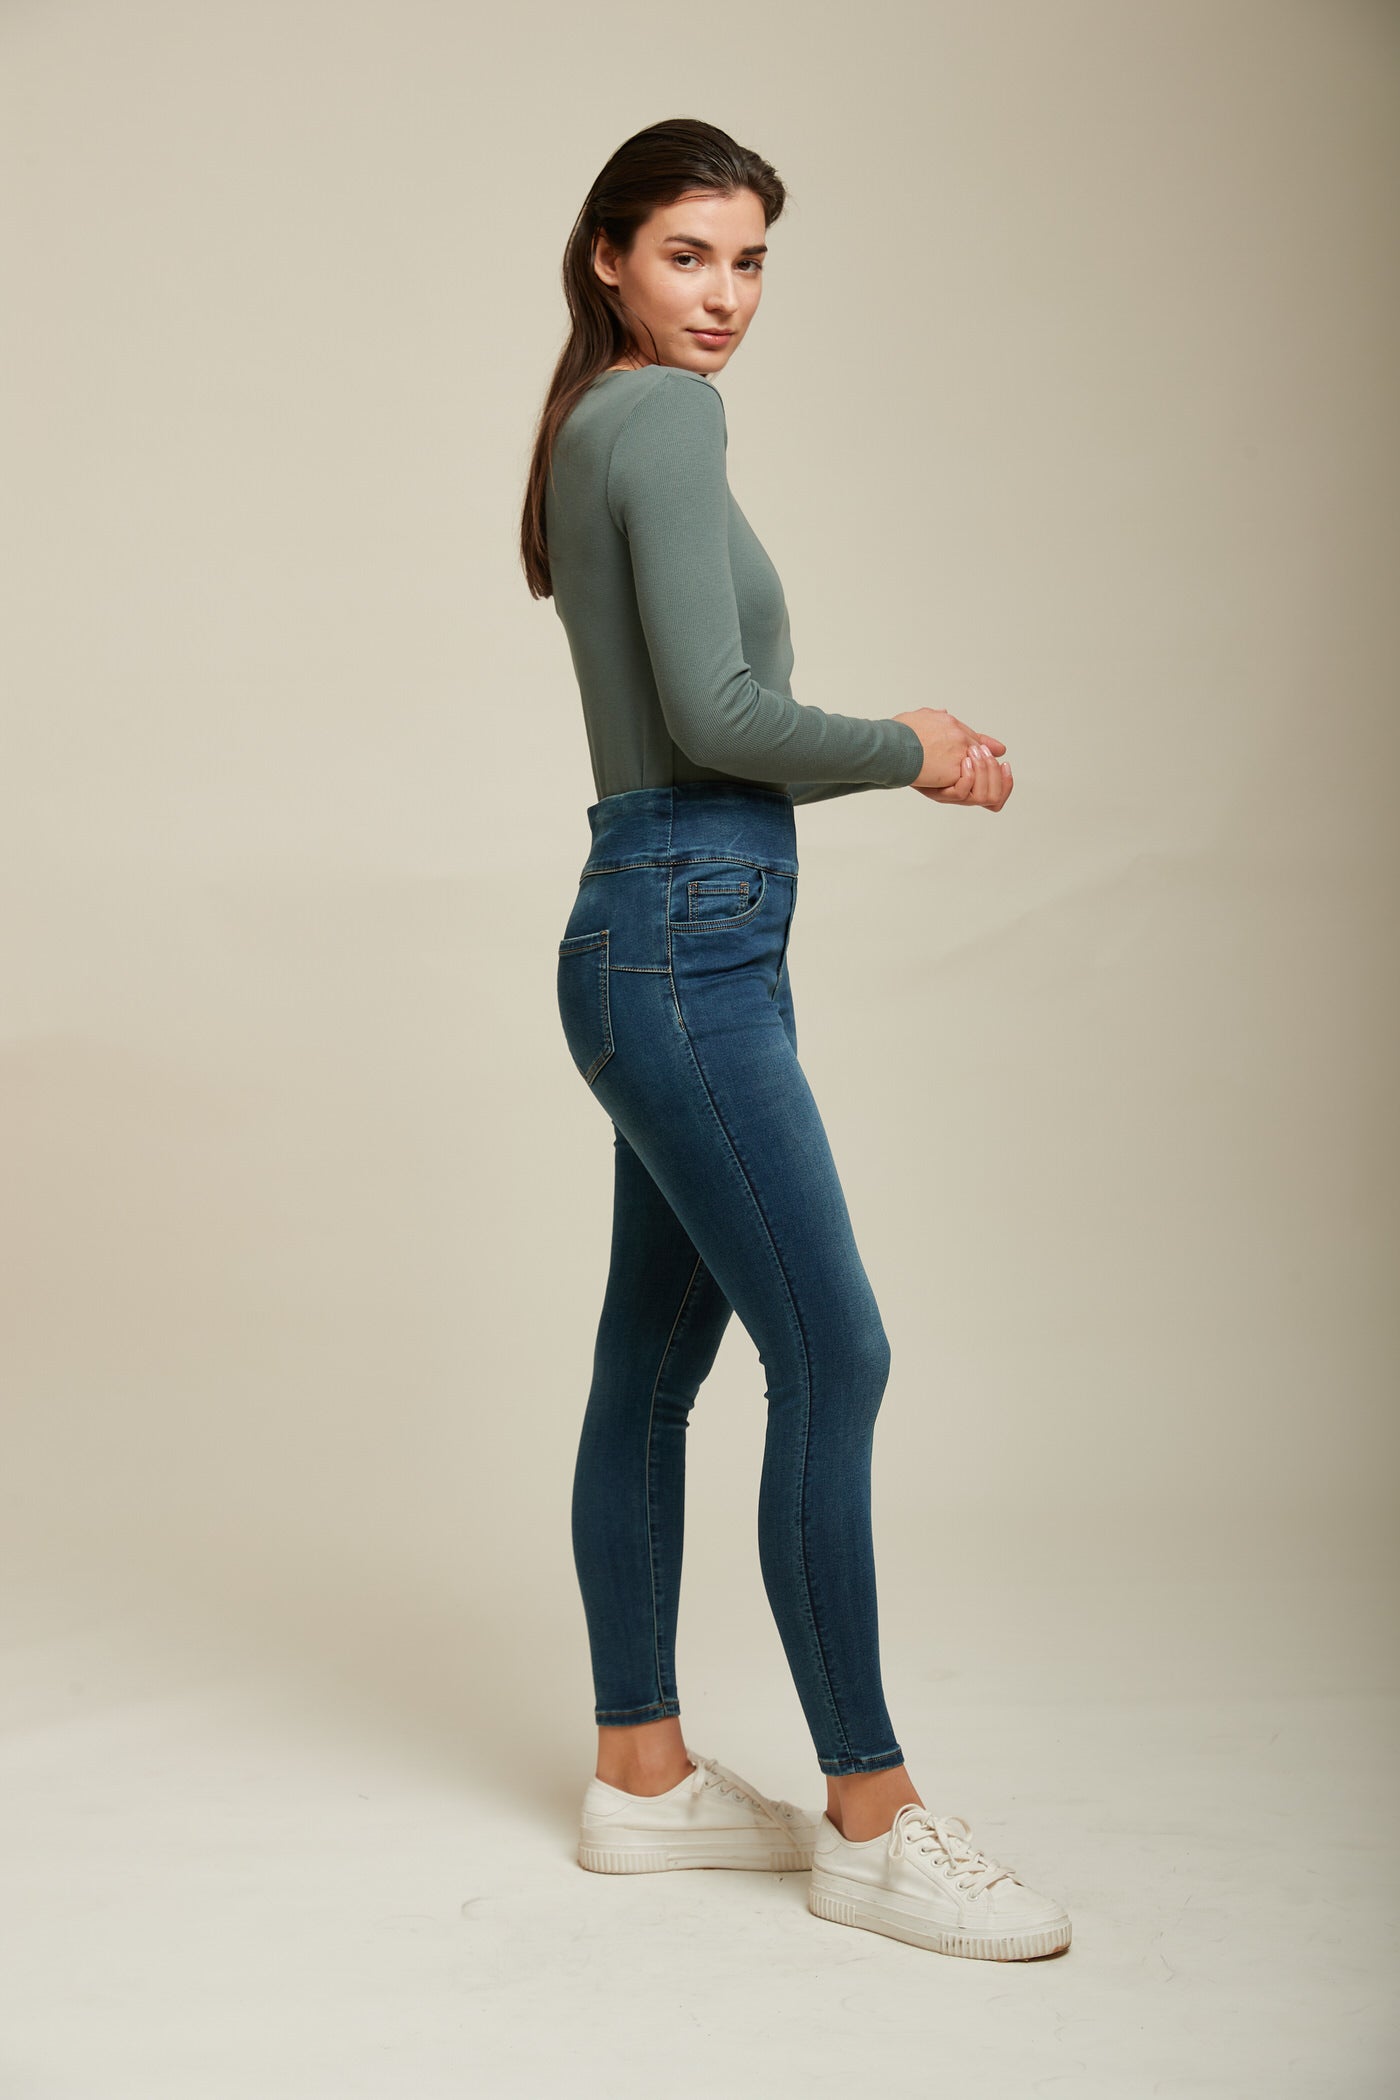 Jogg jean taille haute à enfiler - Sacha by Tocada